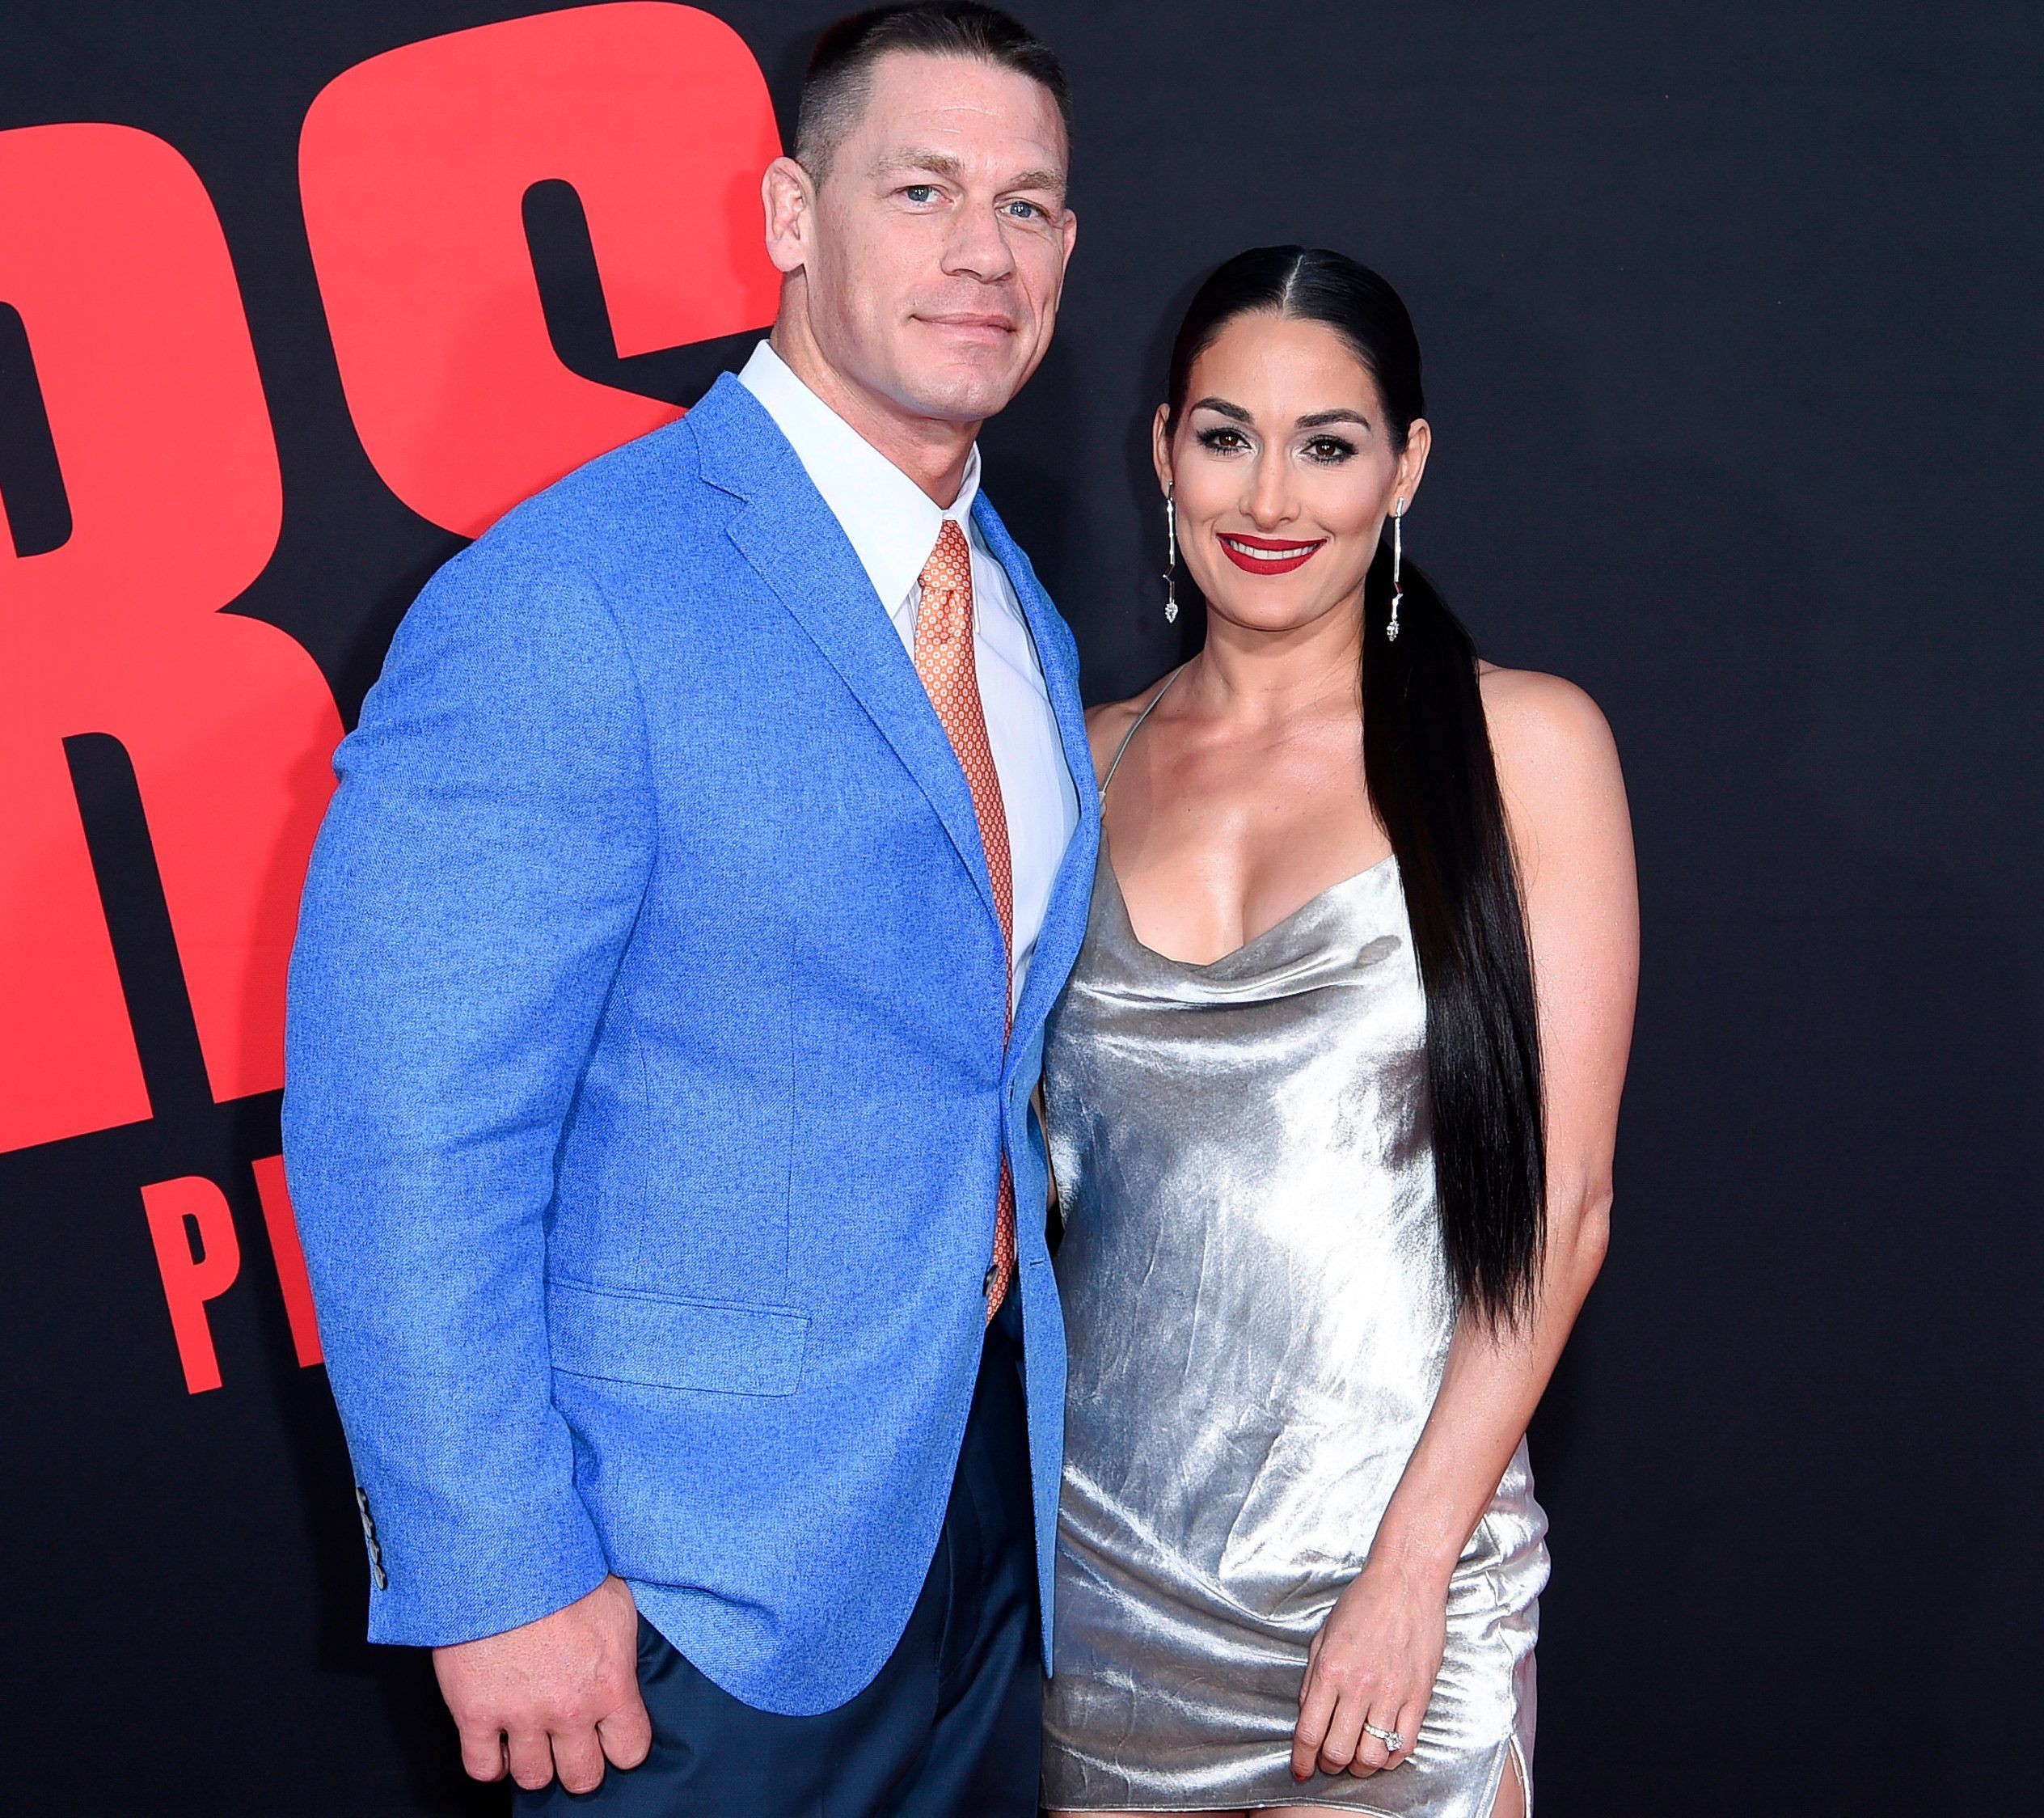 WWE legend John Cena 'very happy' for Nikki Bella after engagement